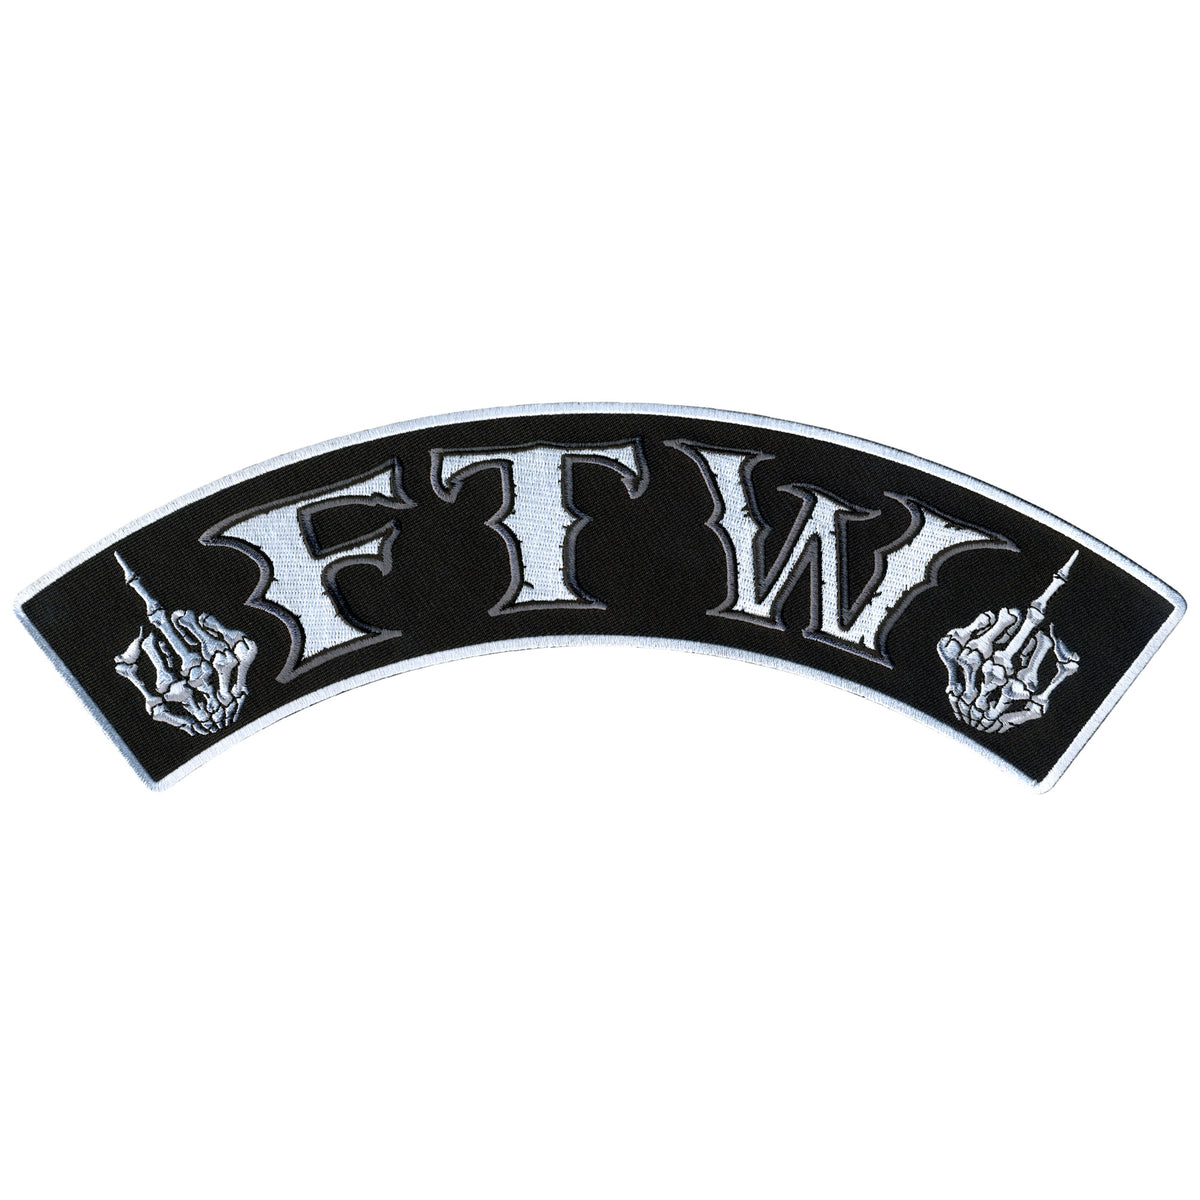 Hot Leathers FTW 12" X 3" Top Rocker Patch